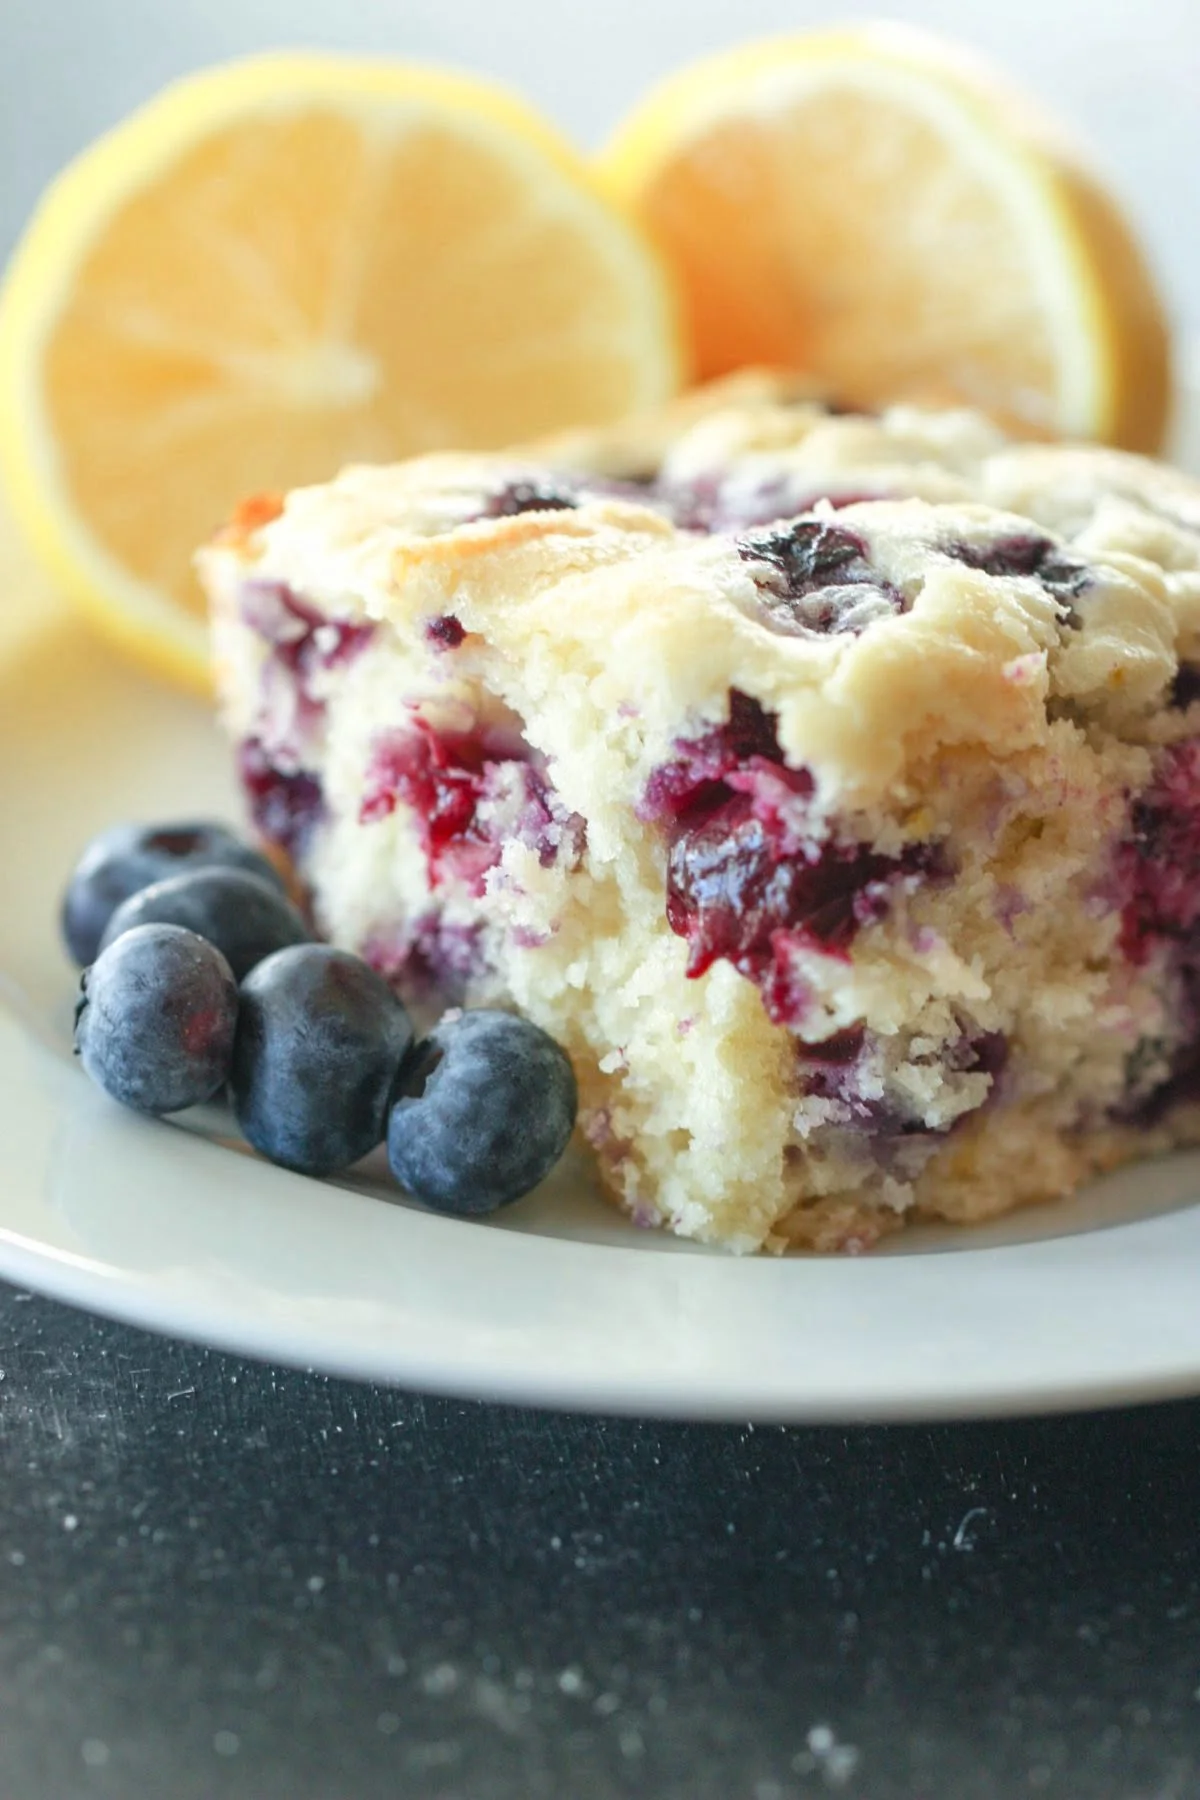 Blueberry Streusel Cake - Fun recipe for summer brunch or dessert!